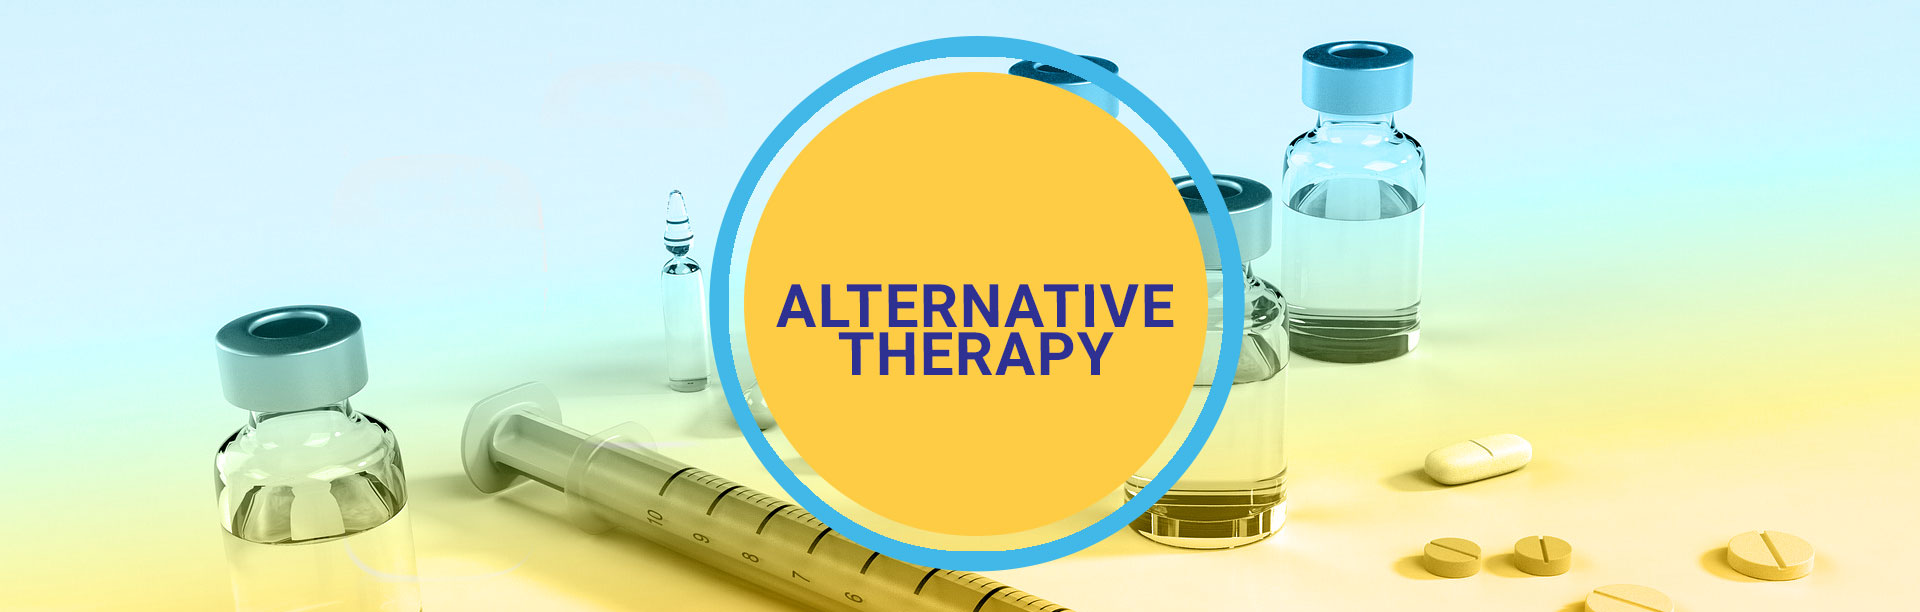 alternative-therapy-header